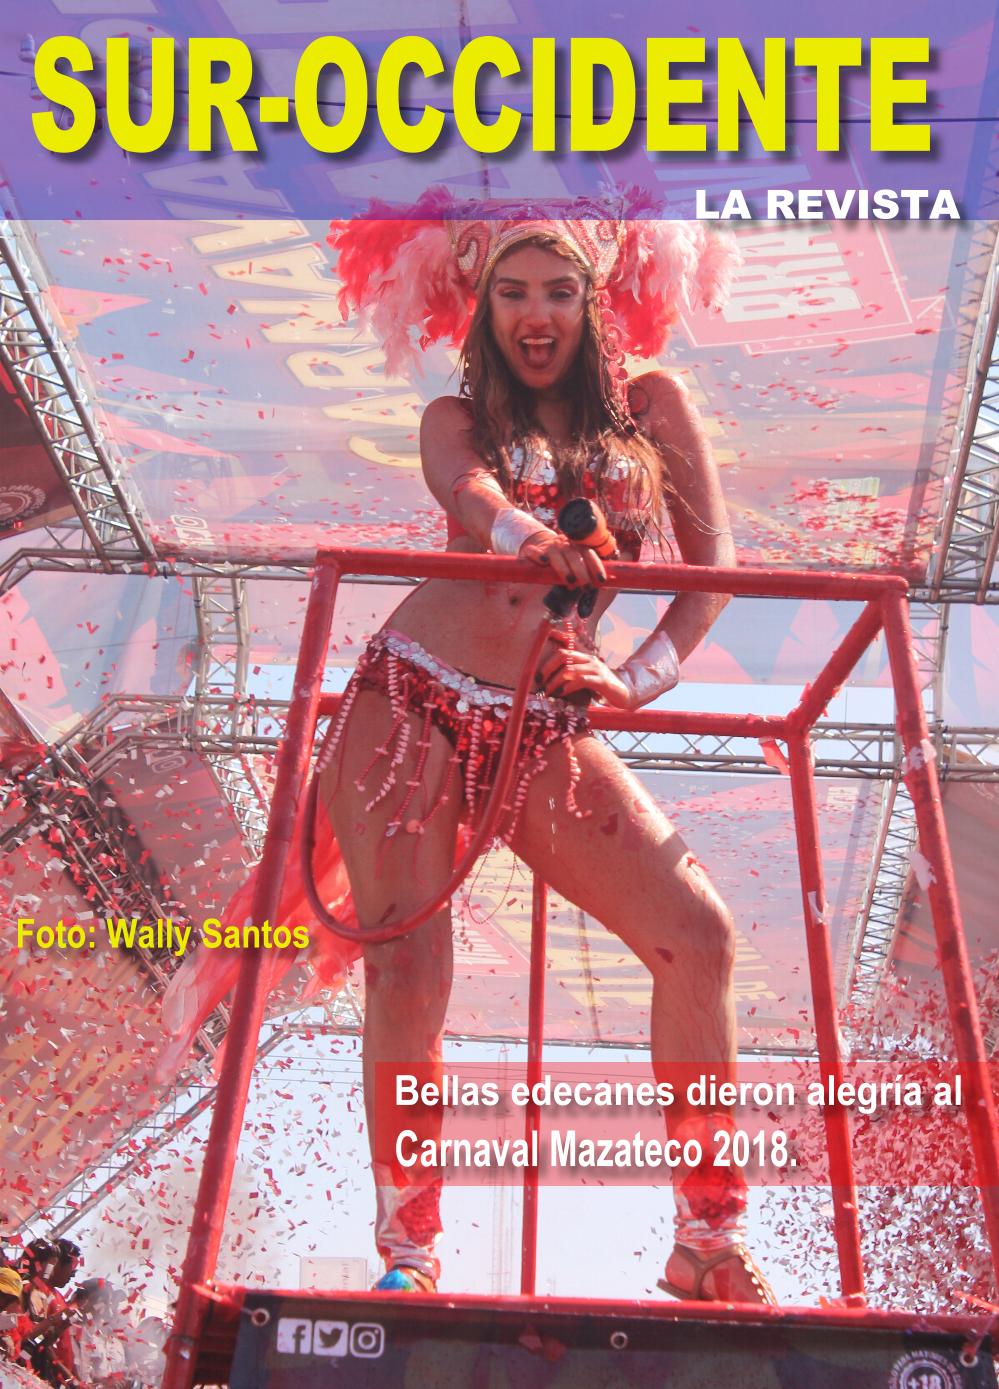 El Carnaval Mazateco 2018